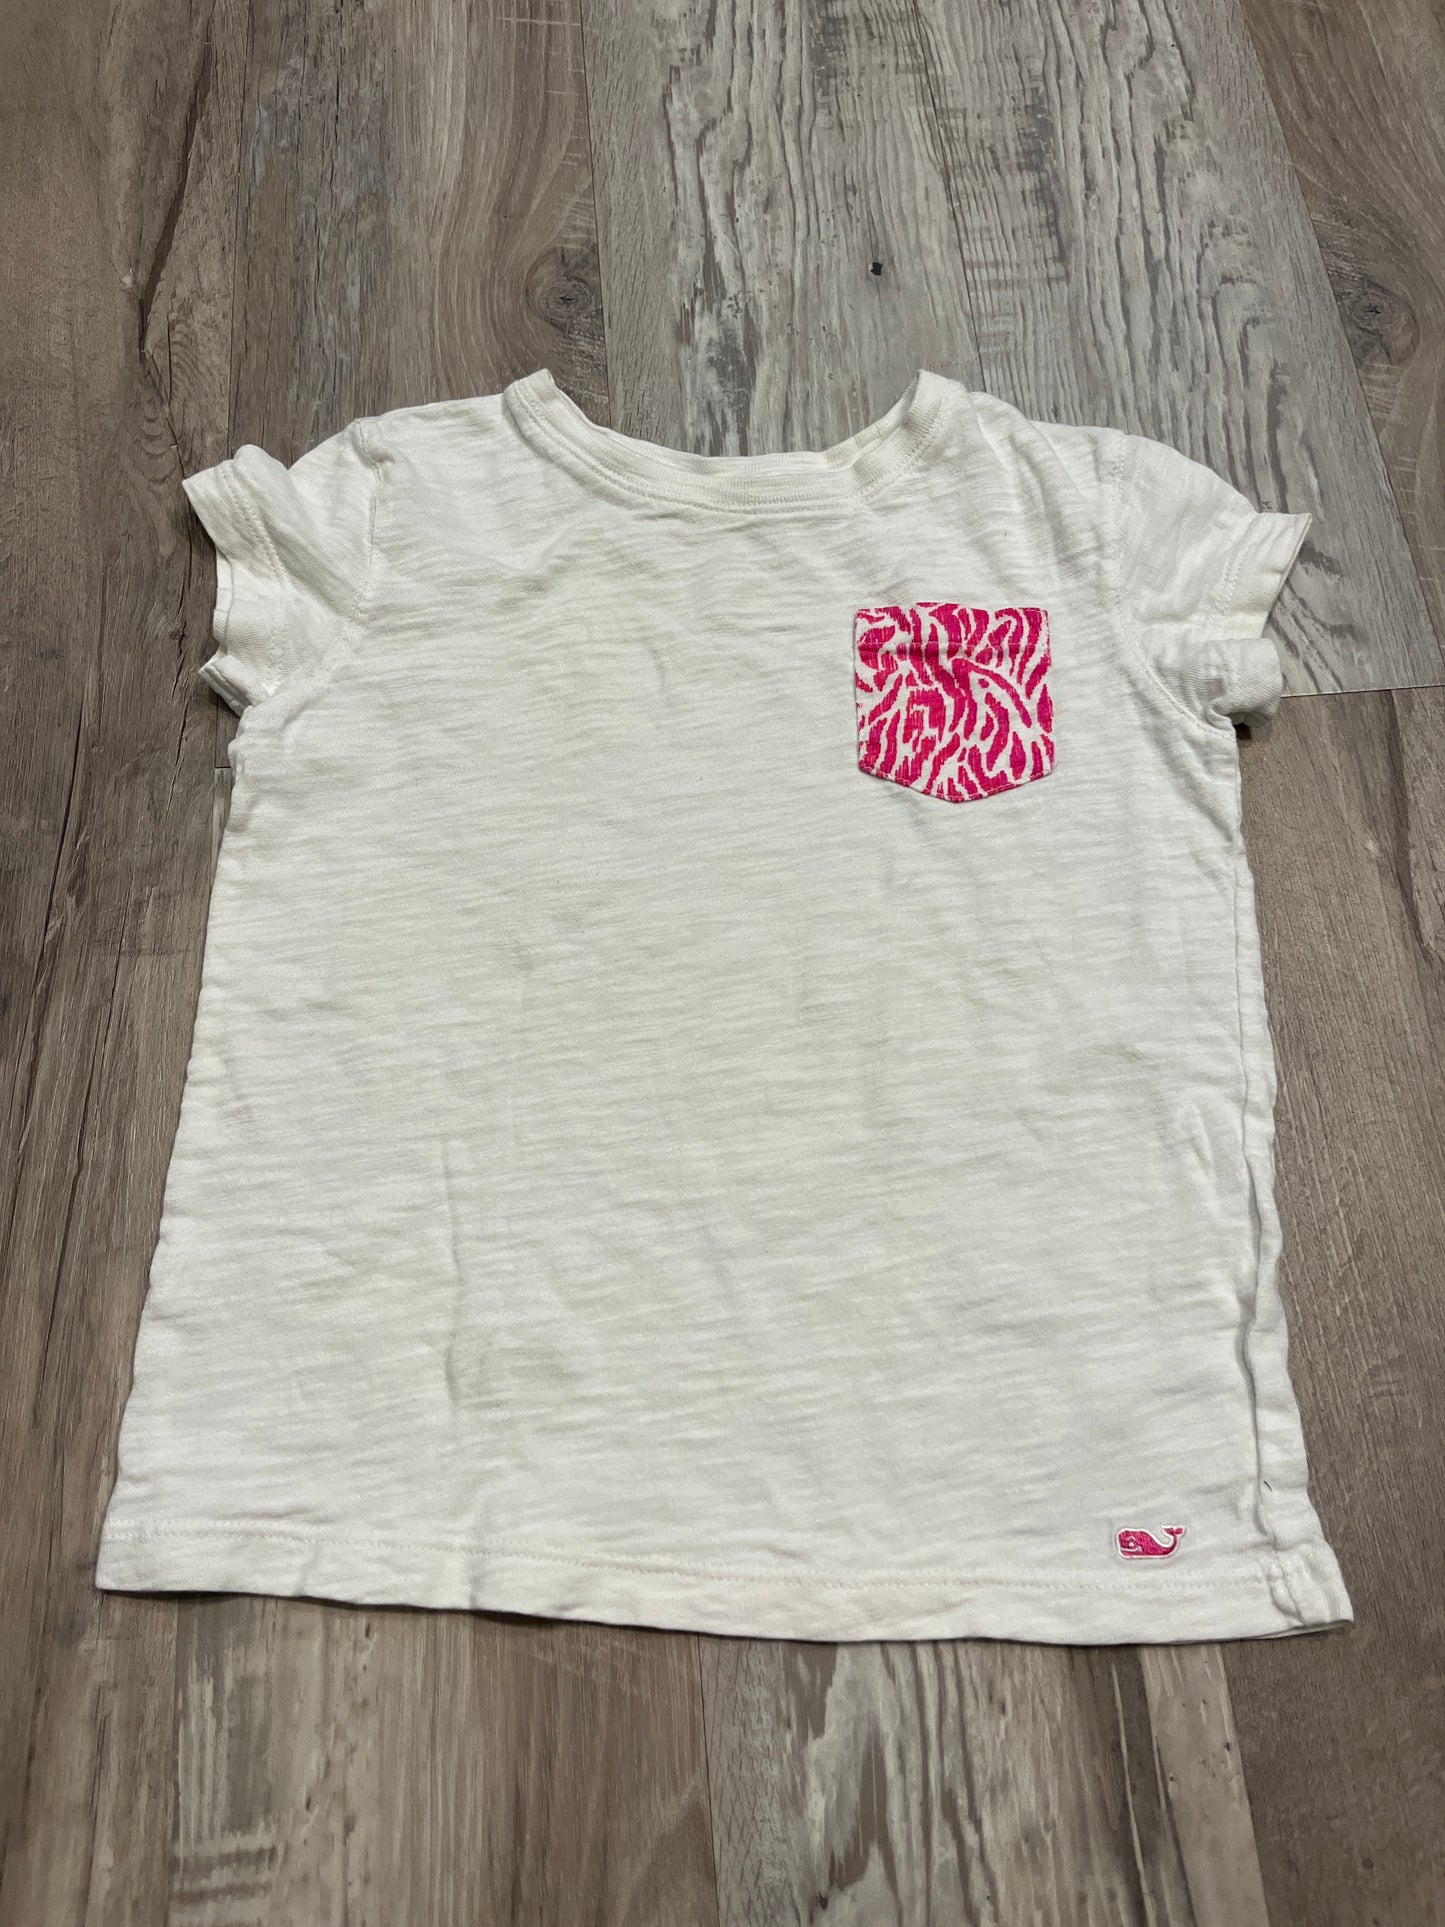 Girls Vineyard Vines White and Pink Pocket Shirt Size XS